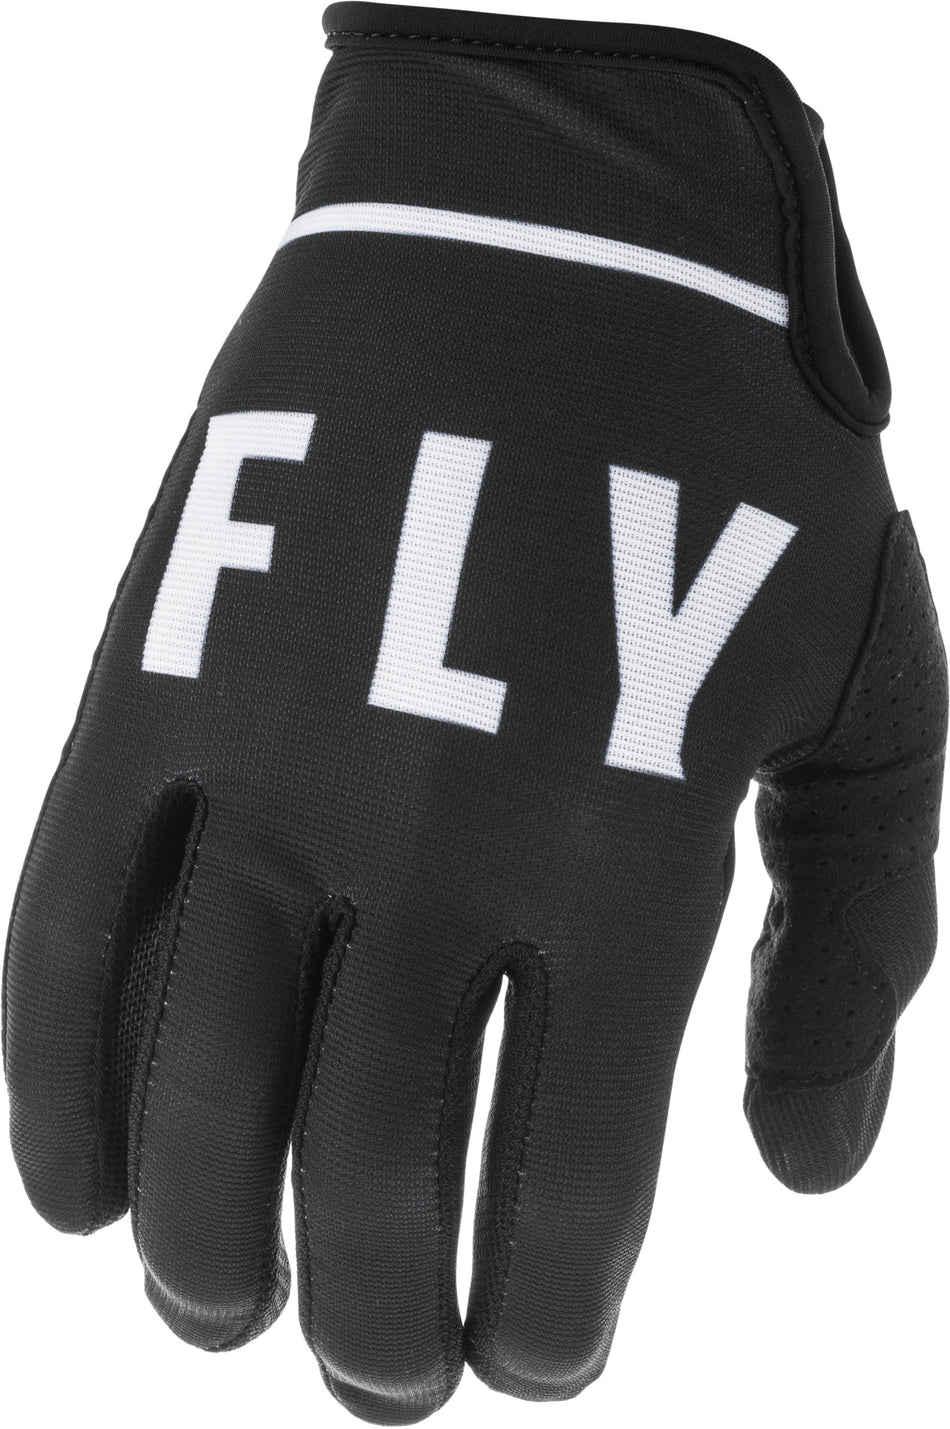 FLY RACING Lite Gloves Black/White Sz 04 373-71104